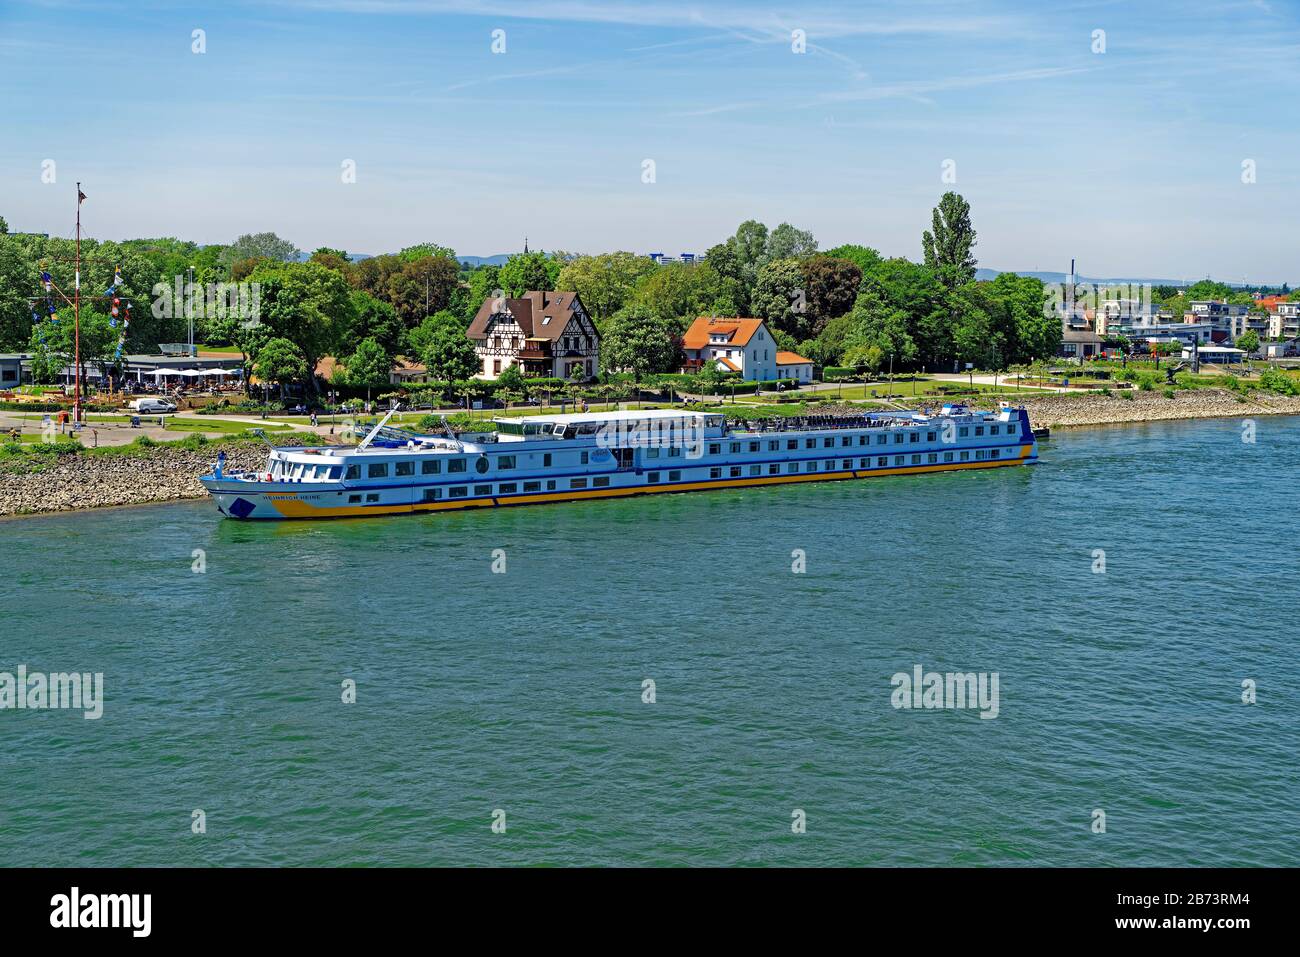 Germany, Rhineland-Palatinate, Speyer, Salierbrücke, SchUM town, river, the Rhine, ship investor, river cruise ship, bank promenade, place of interest Stock Photo